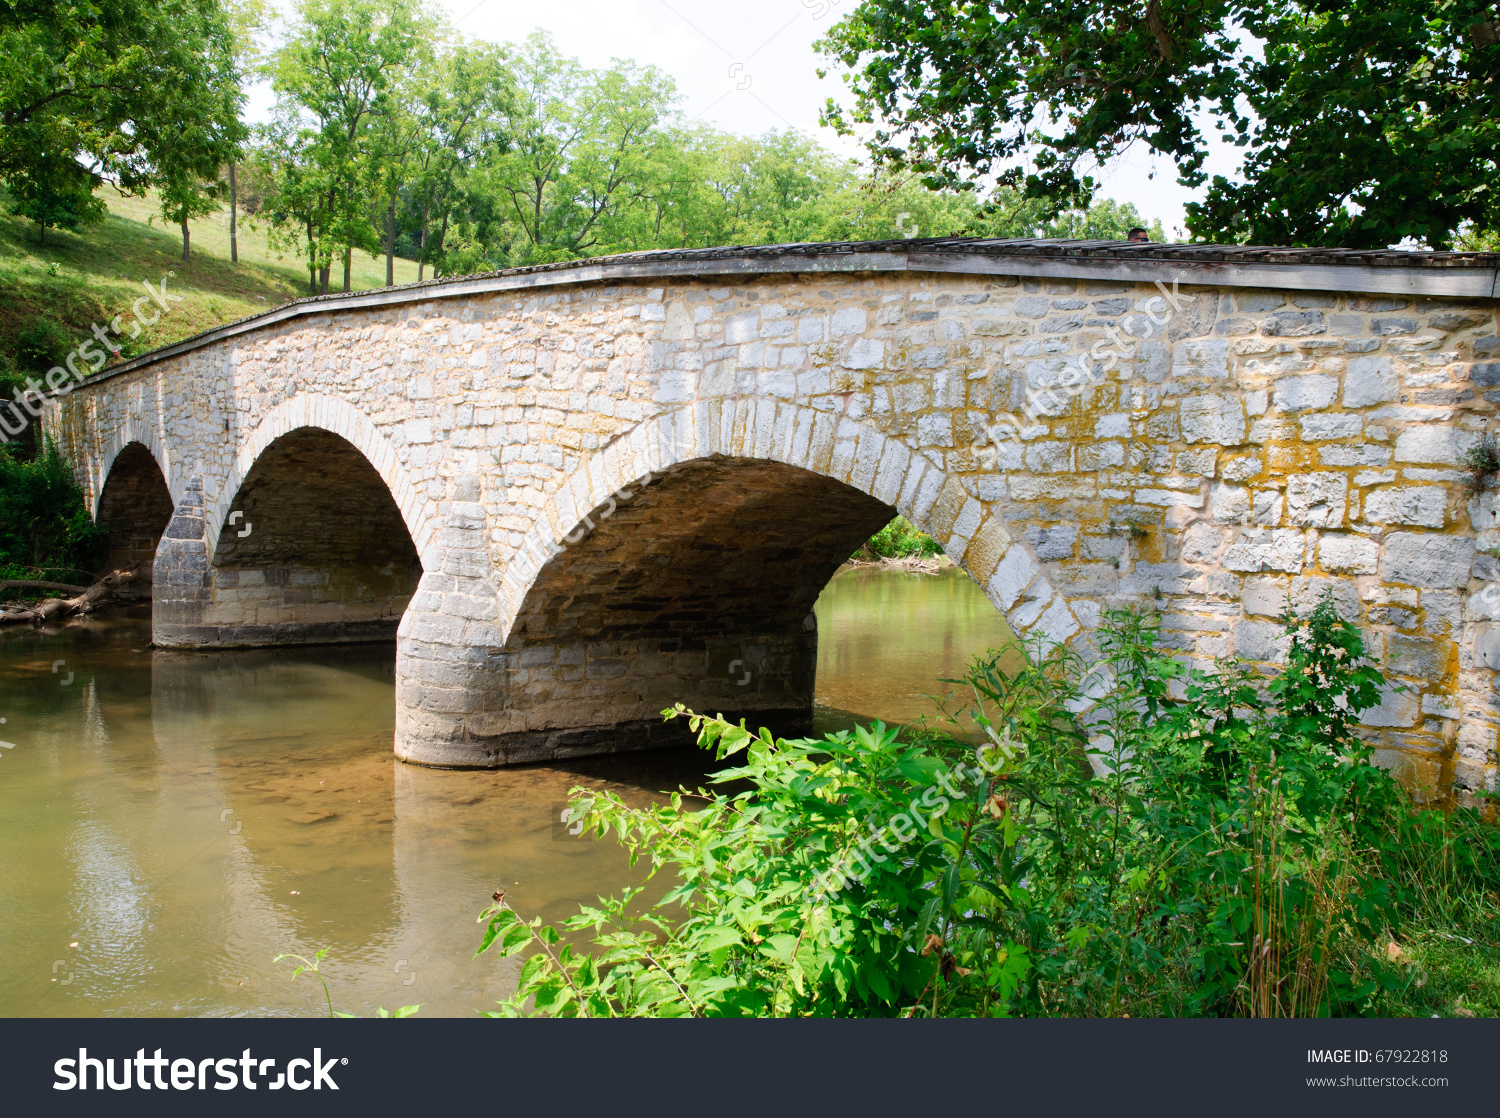 Burnside Bridge Over Antietam Creek Stock Photo 67922818.